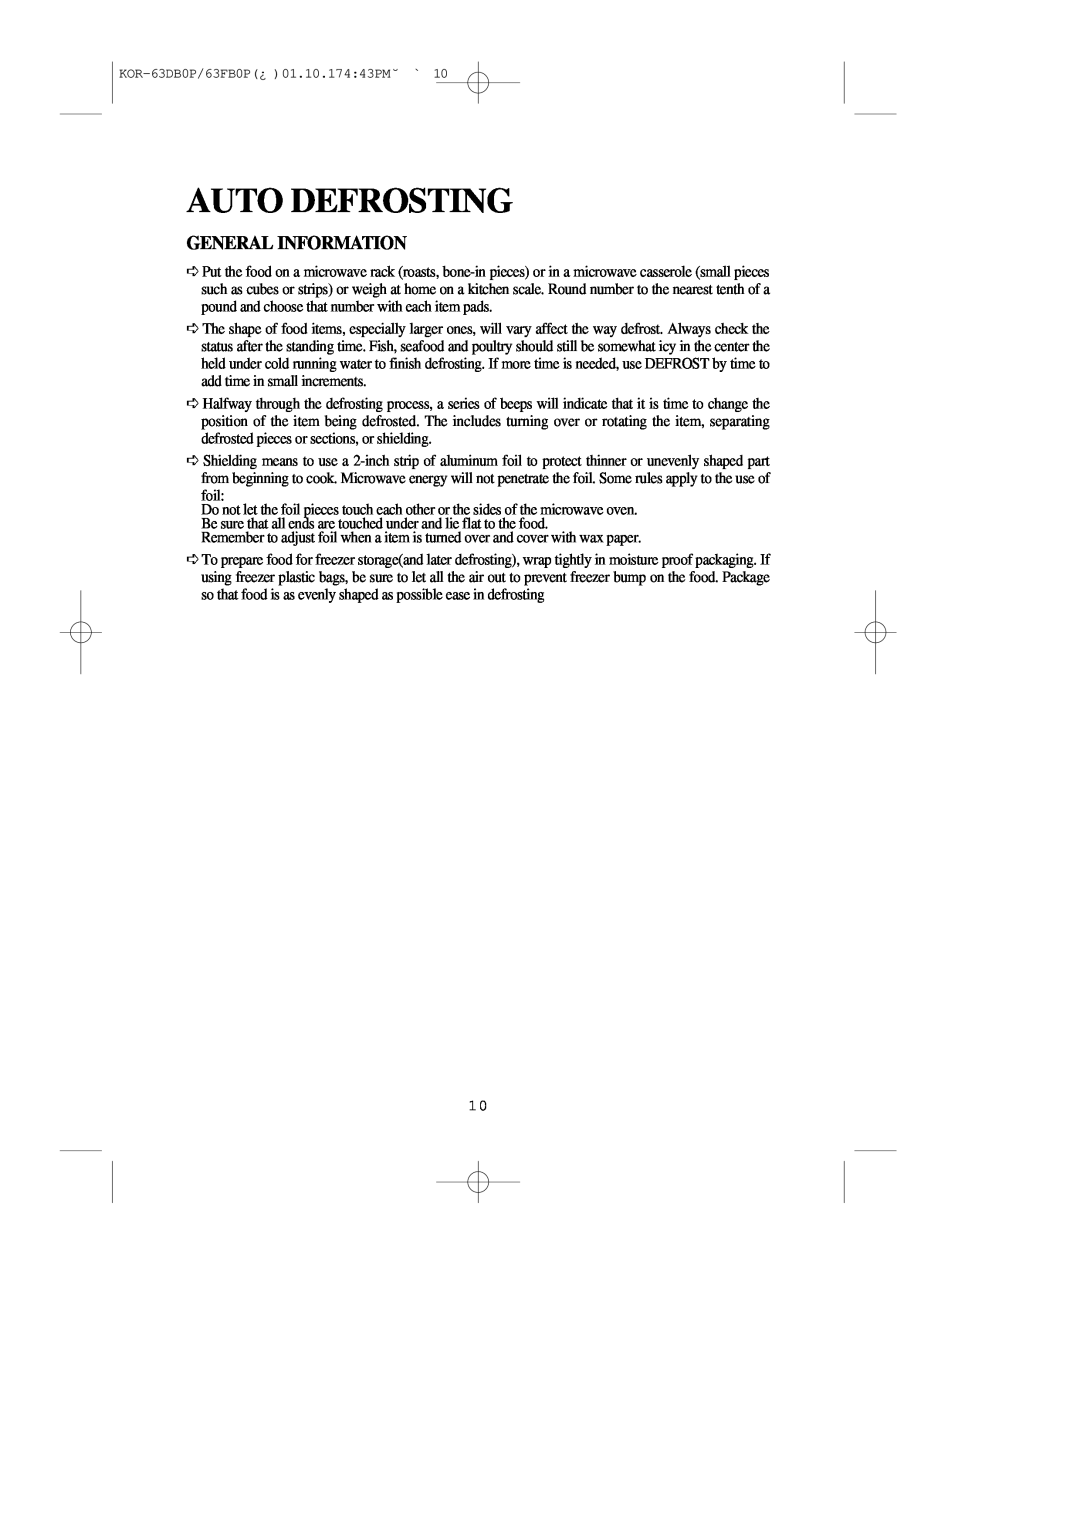 Daewoo KOR-63DB/63FB manual Auto Defrosting, General Information 